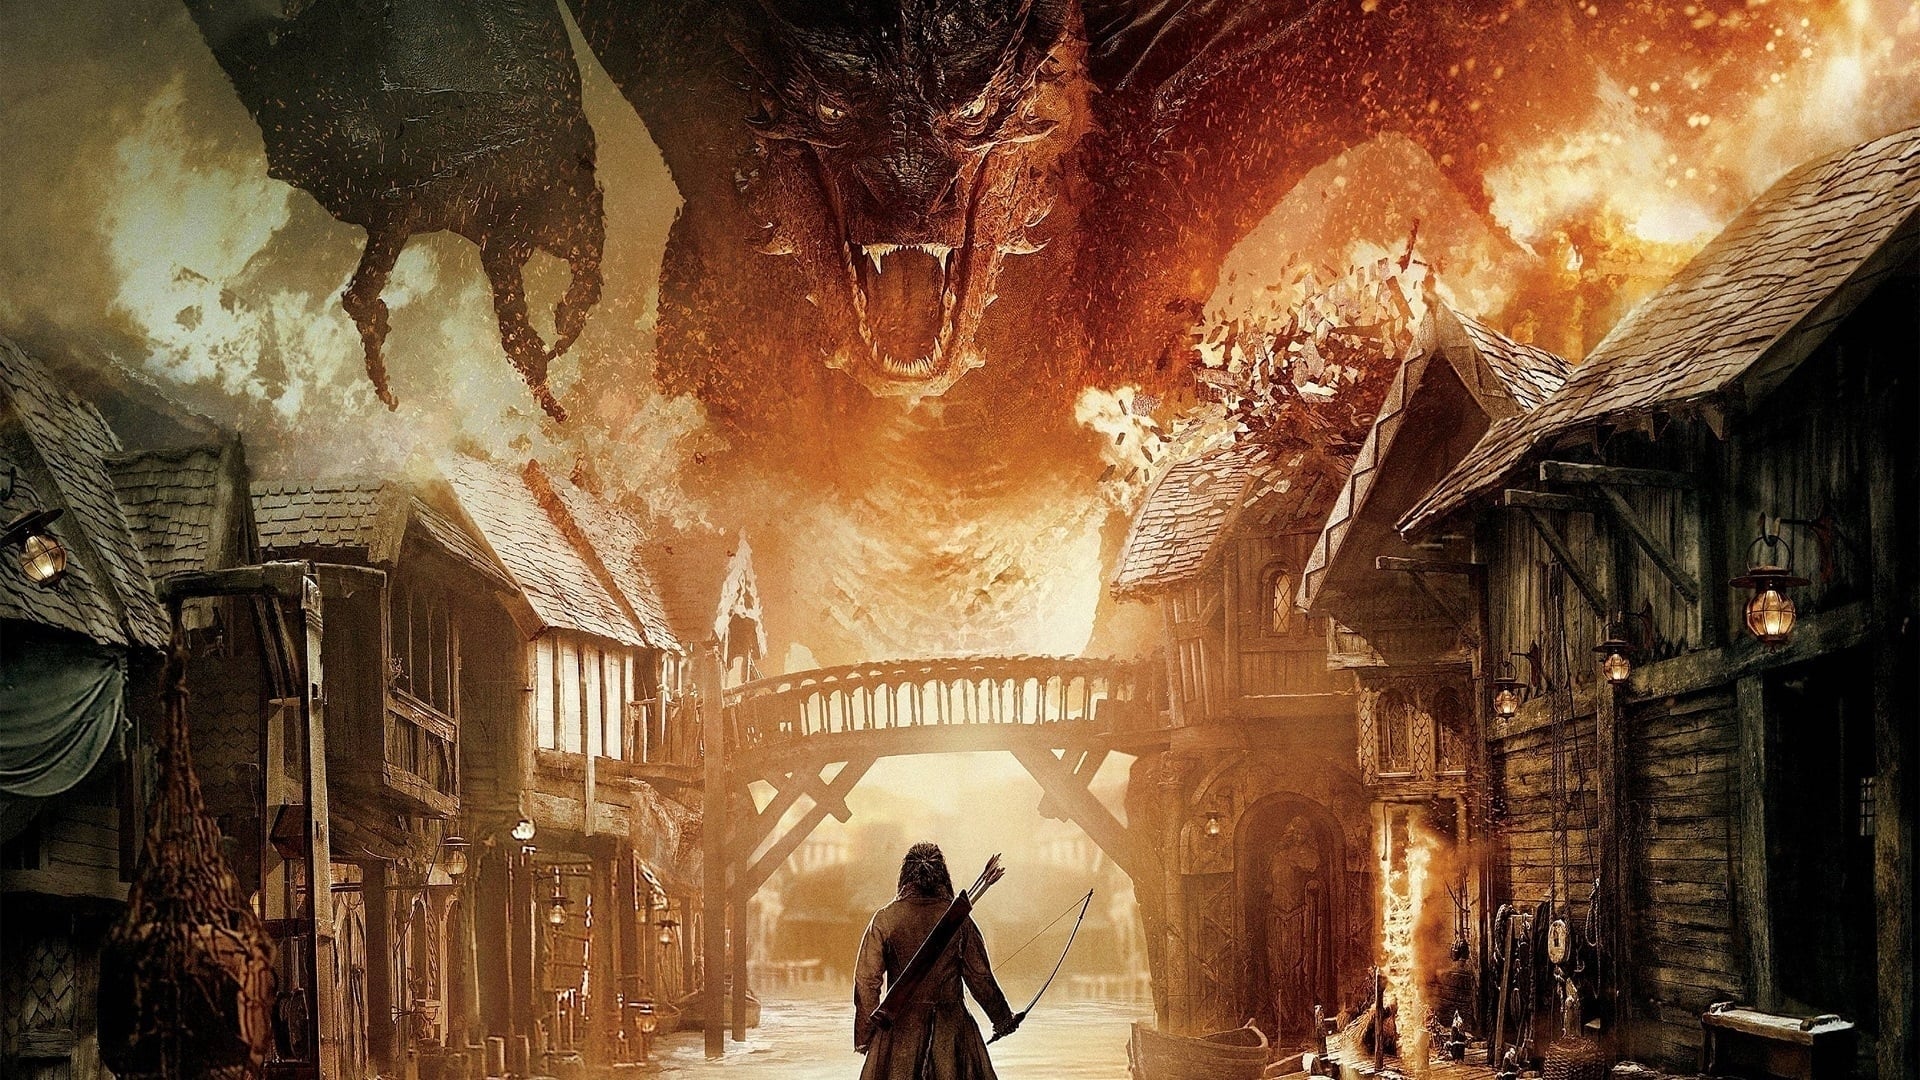 Image du film Le Hobbit : la bataille des cinq armées (version longue) kktqylivhyrsj7ljhhasryxkaxjjpg